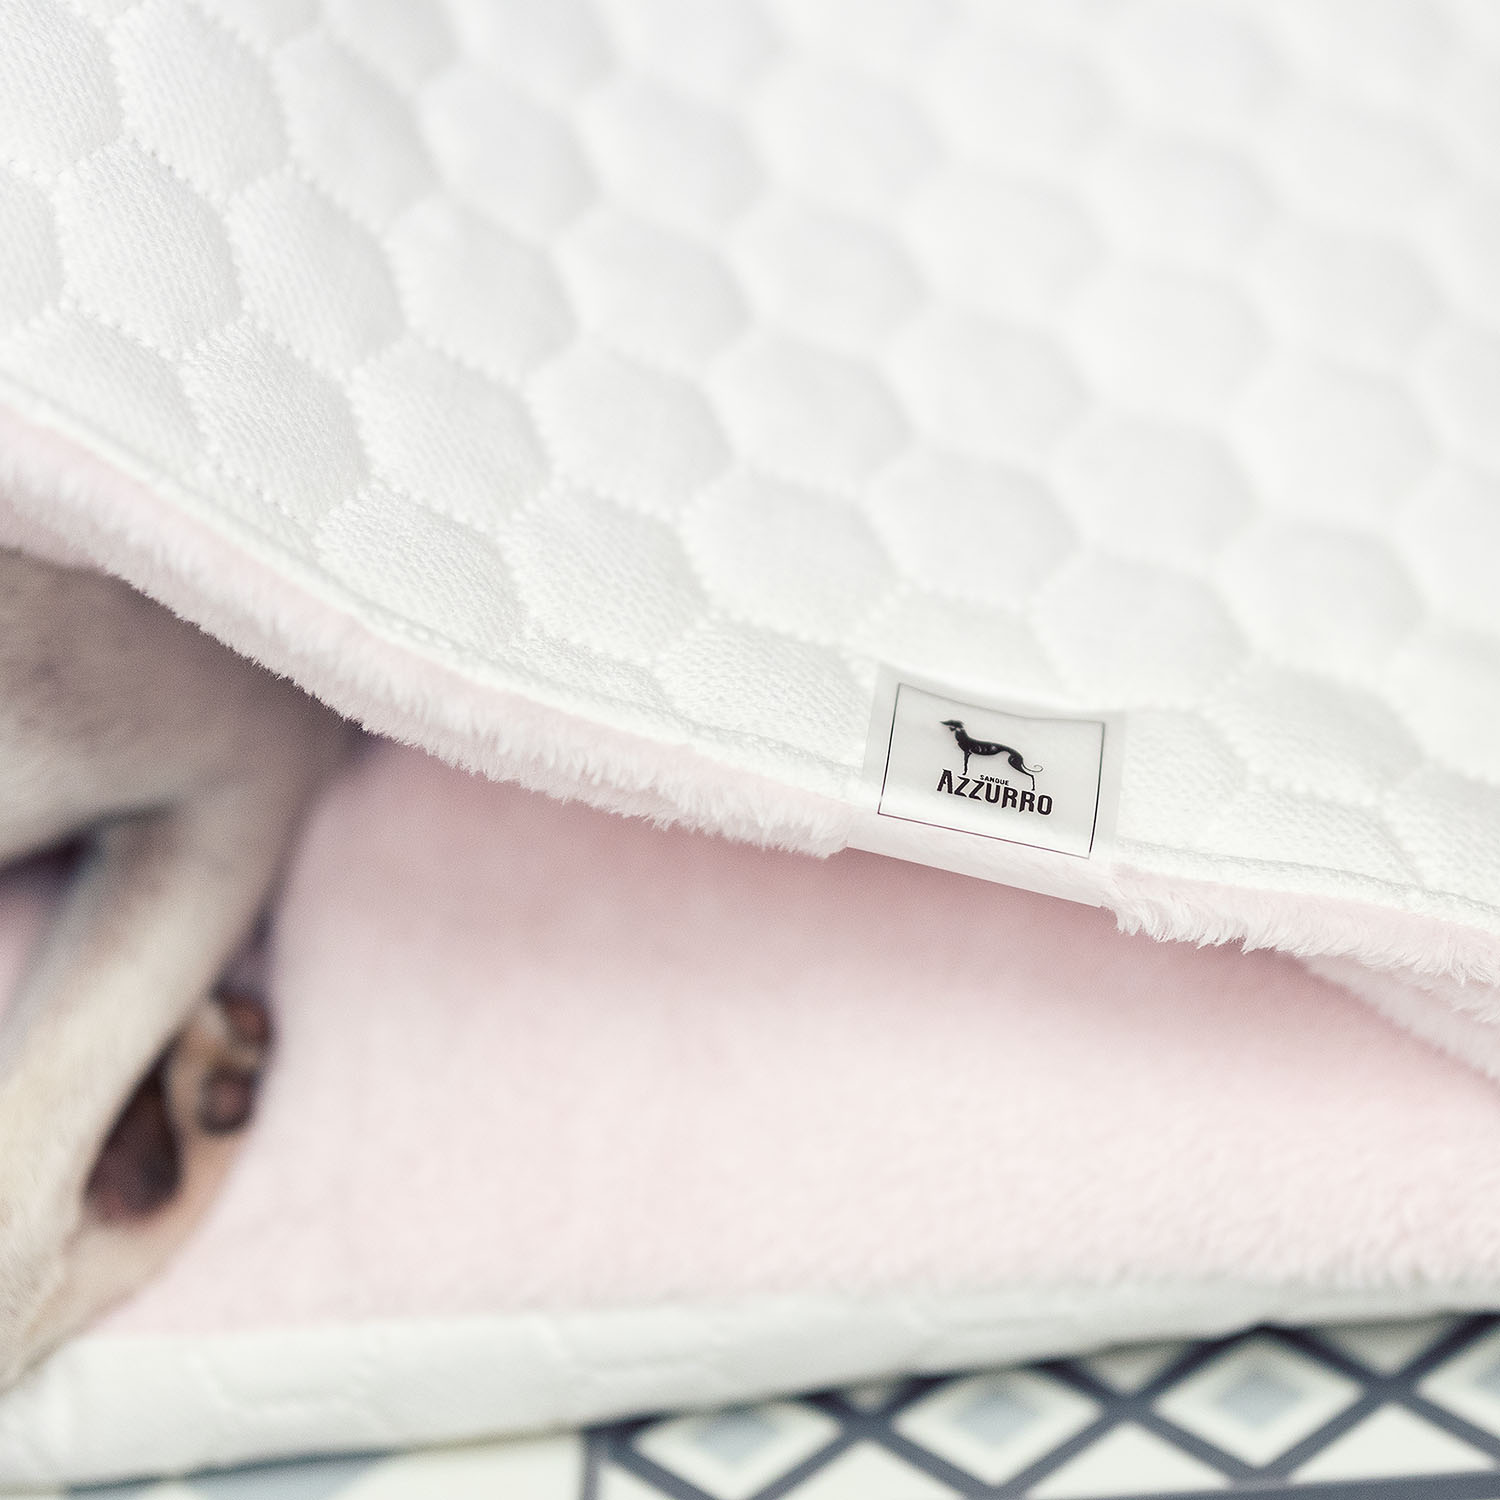 Iitalian greyhound bed Cream Pink soft - Sangue Azzurro image 3